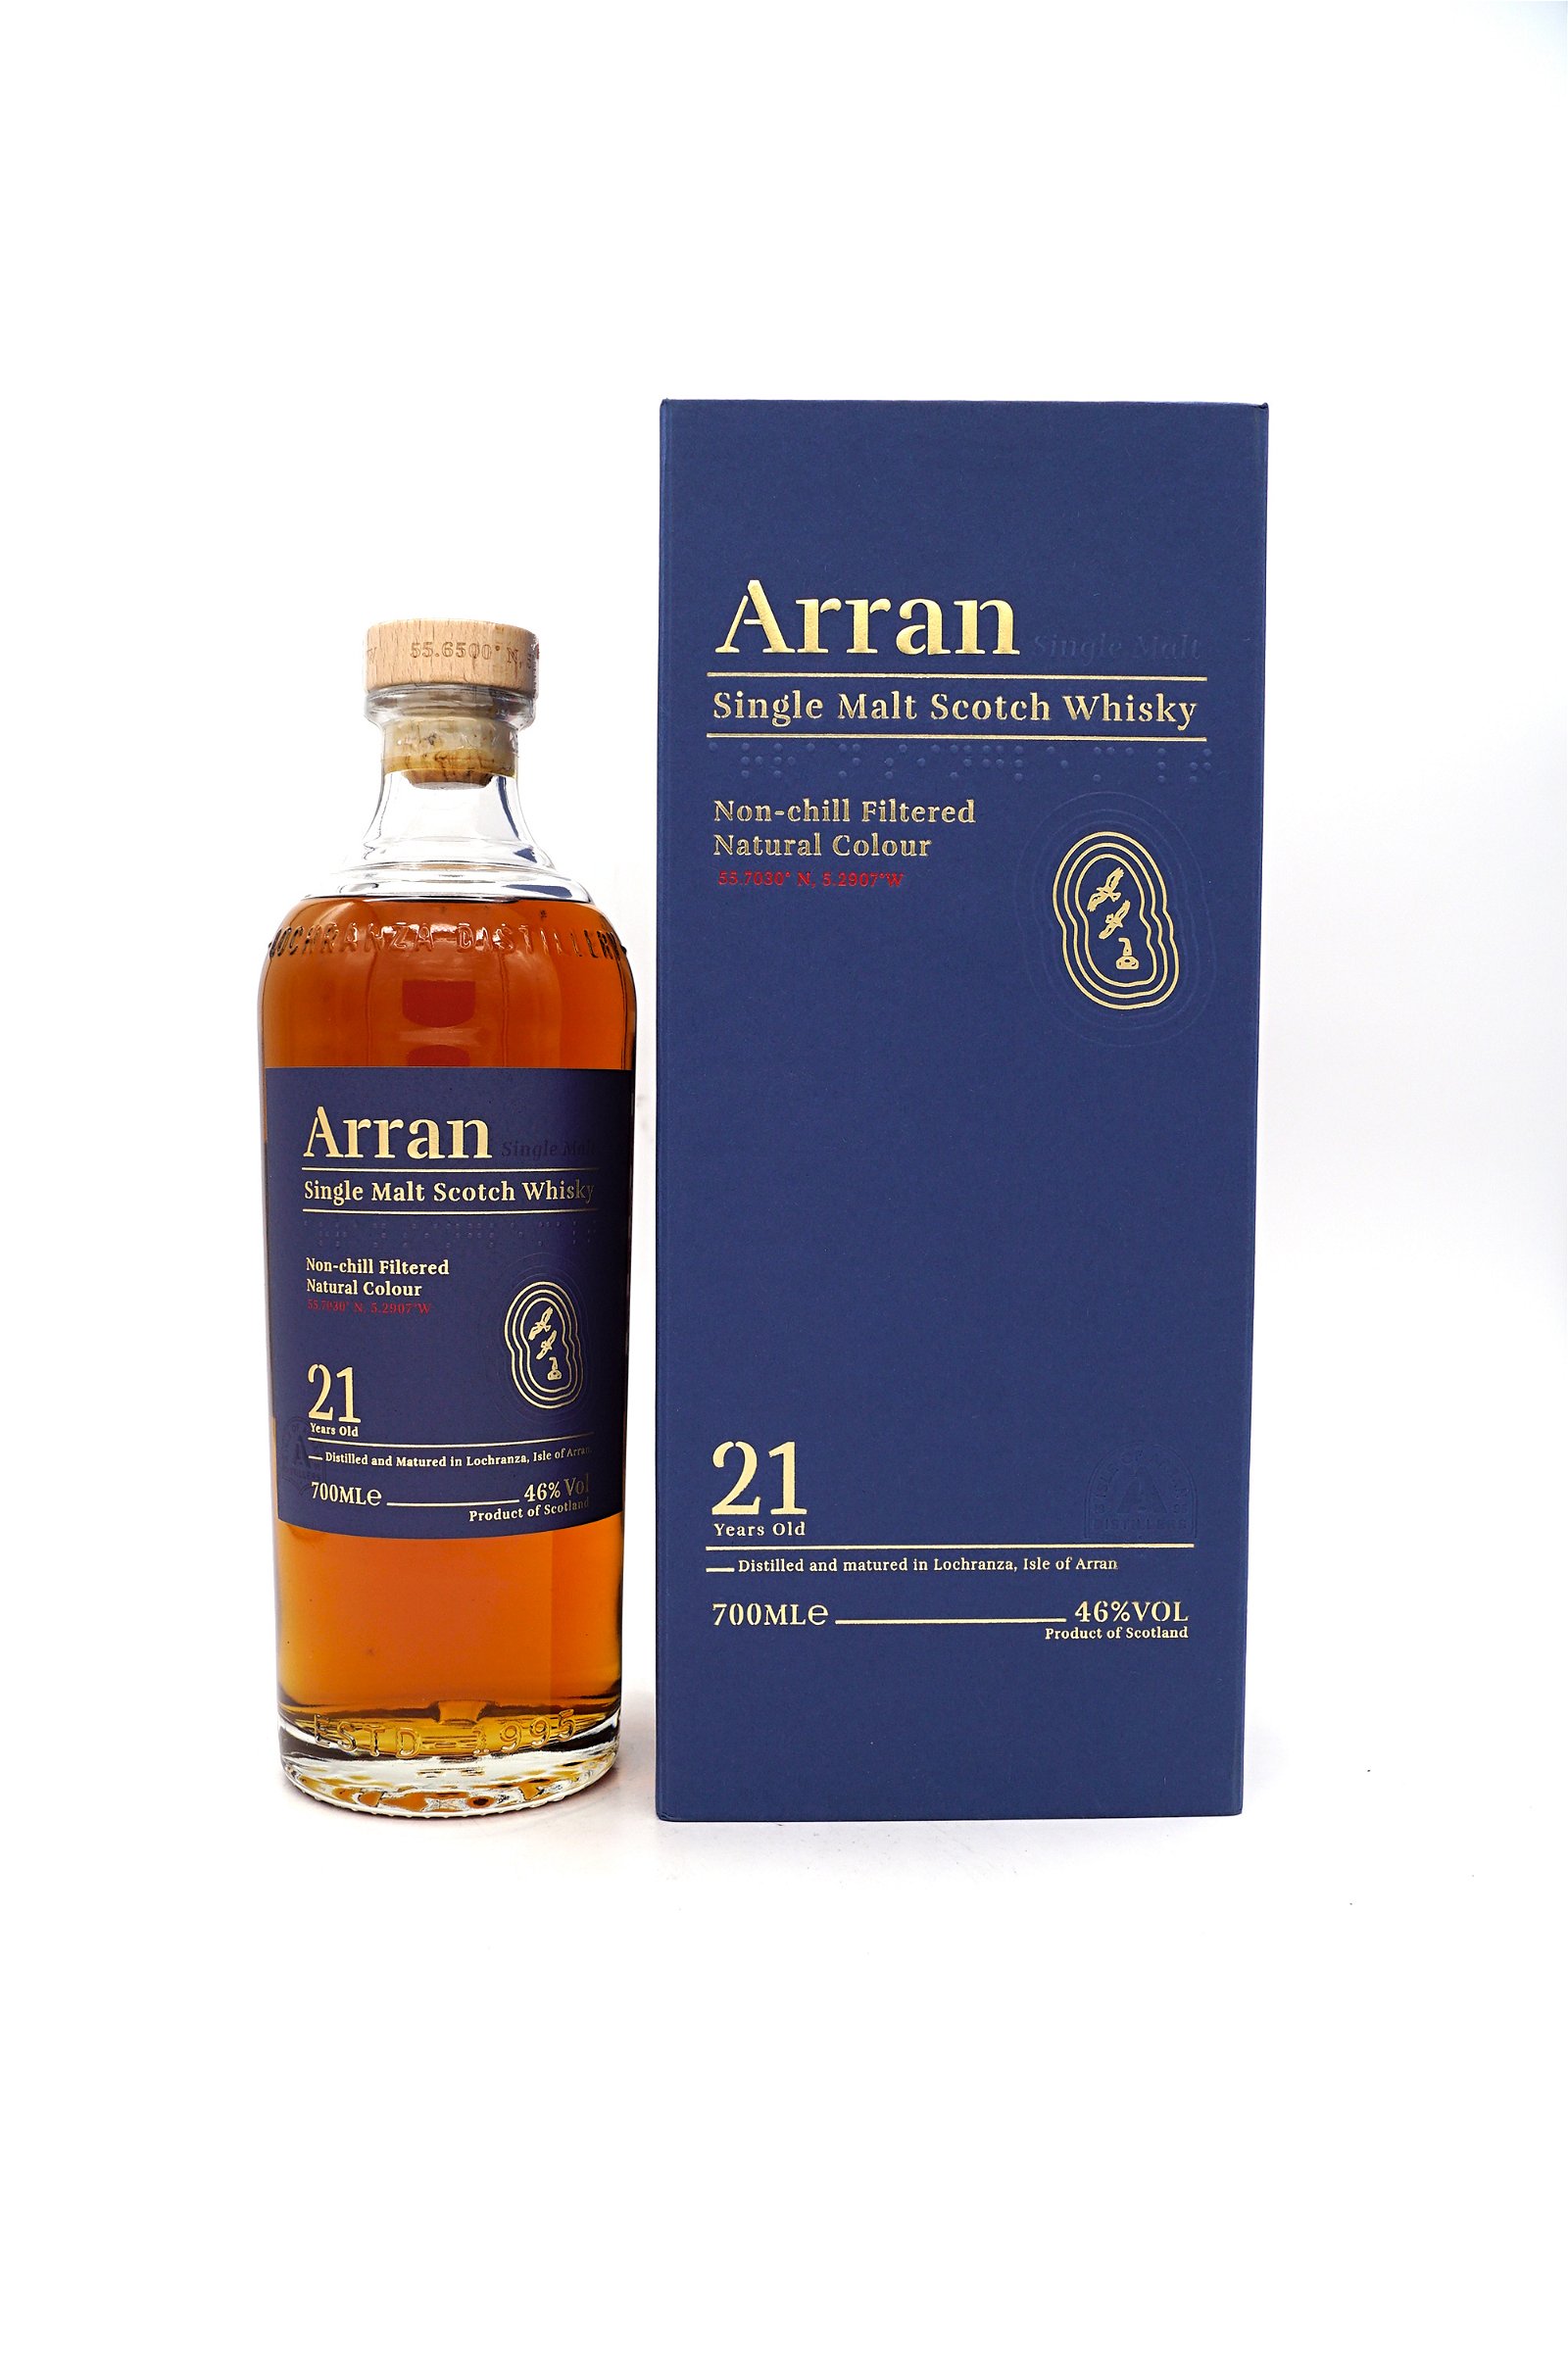 The Arran 21 Jahre Single Malt Scotch Whisky